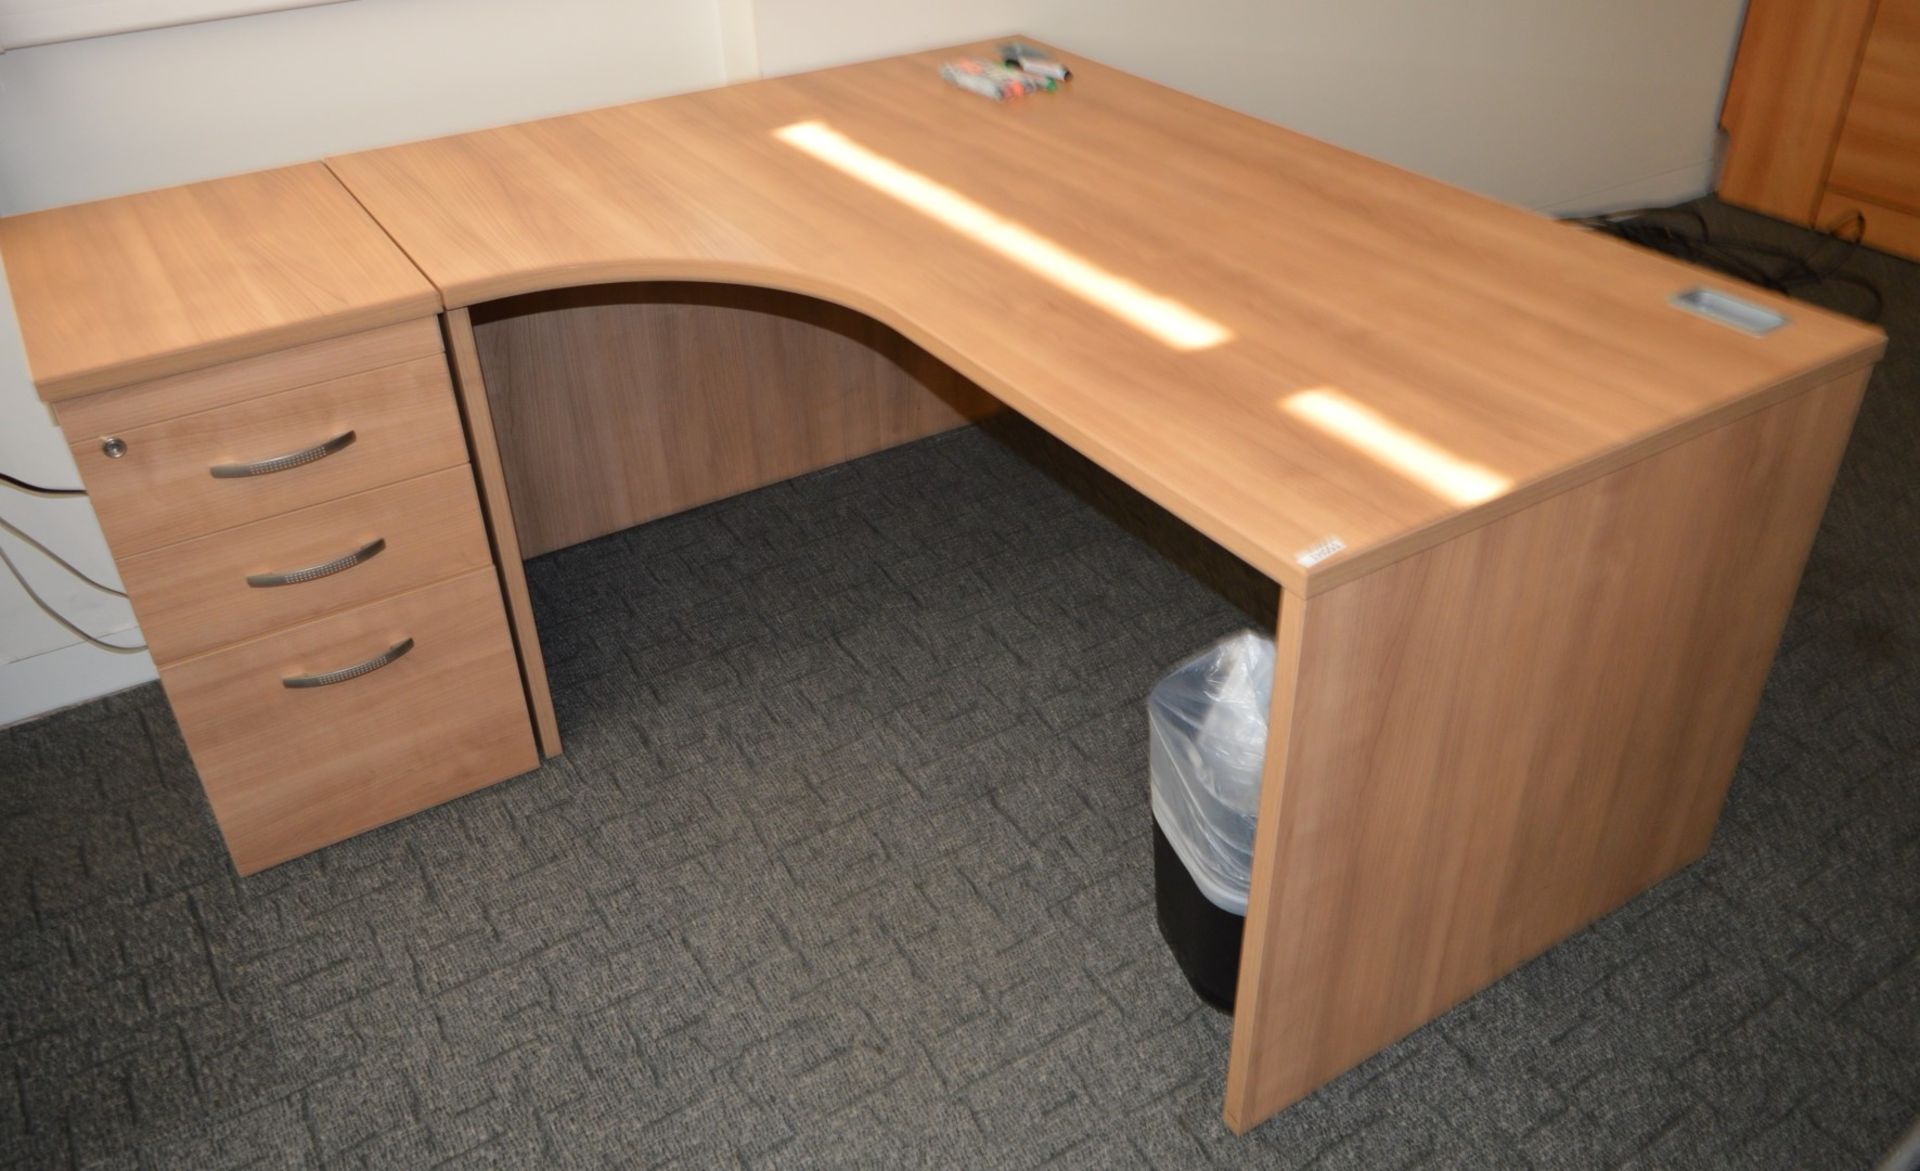 1 x Ergonomical Left Hand Office Desk With Three Drawer Pedestal - Modern Birch Finish - CL400 - Ref - Image 2 of 4